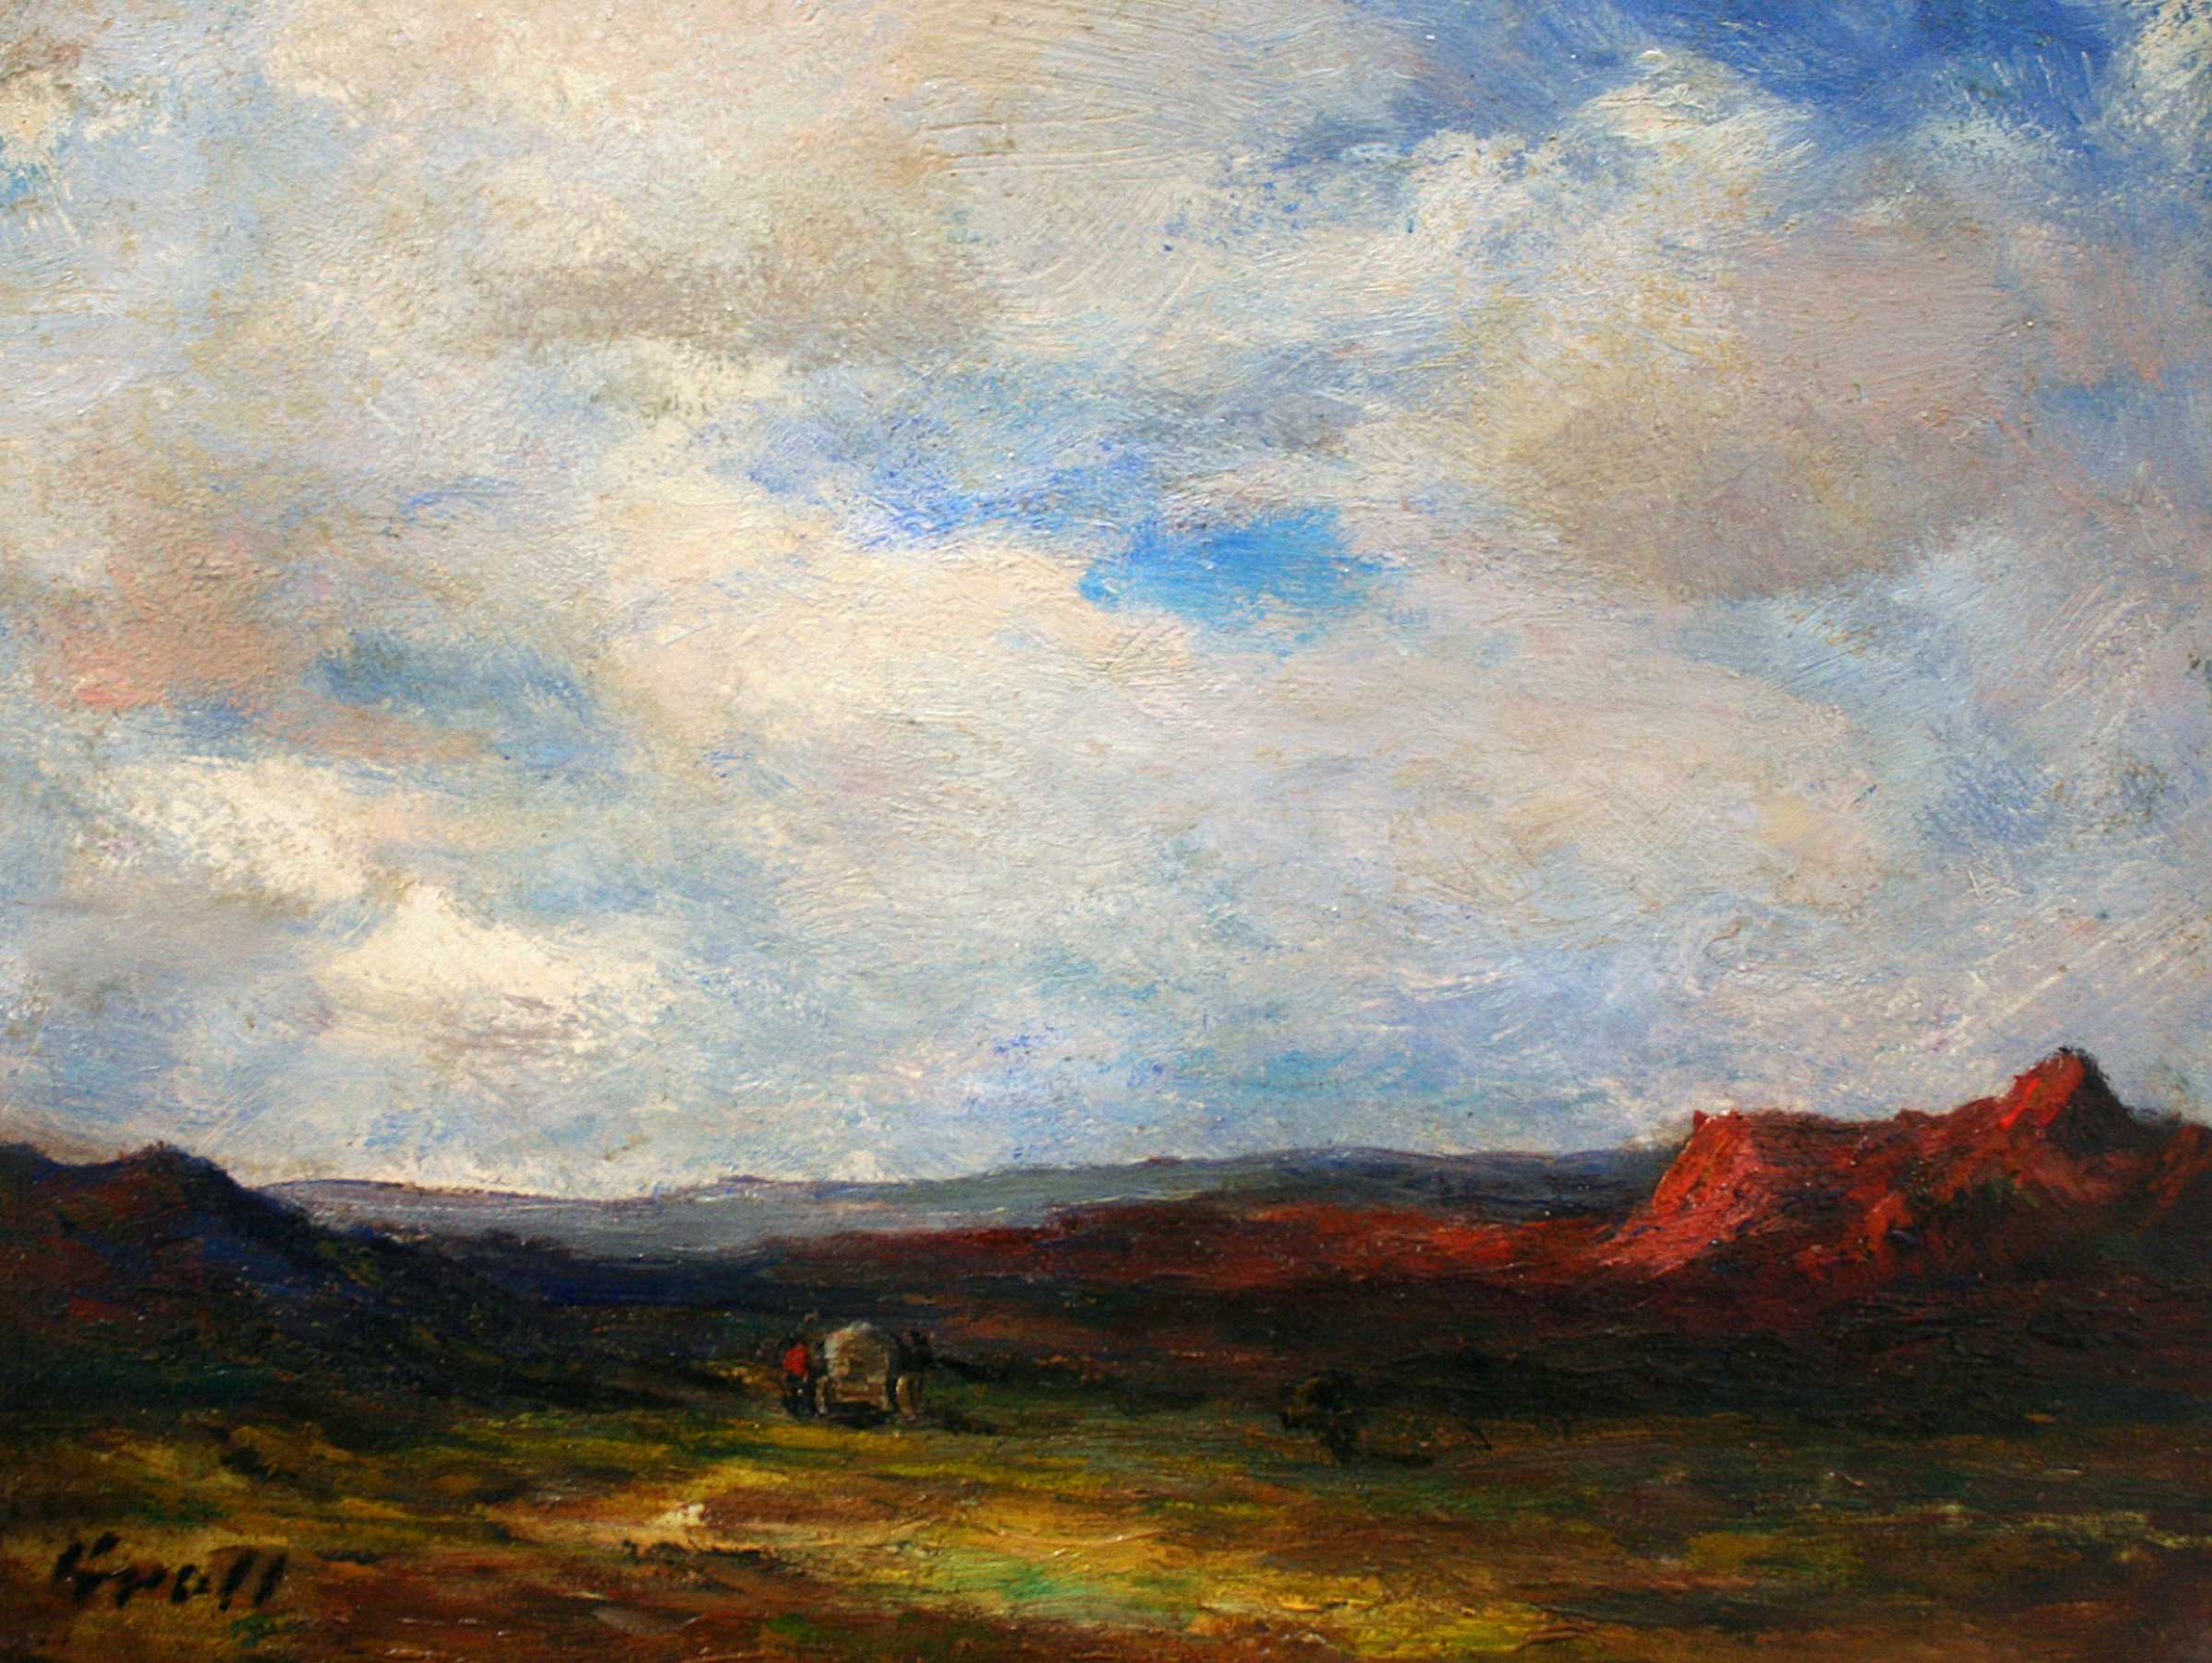 Albert Lorey Groll (Am. 1866-1952)
Untitled (Western Landscape)
Oil on board, ca. 1910
6” x 8” (Framed: 9 1/2” x 11 1/2”)
Signed Groll lower left 
